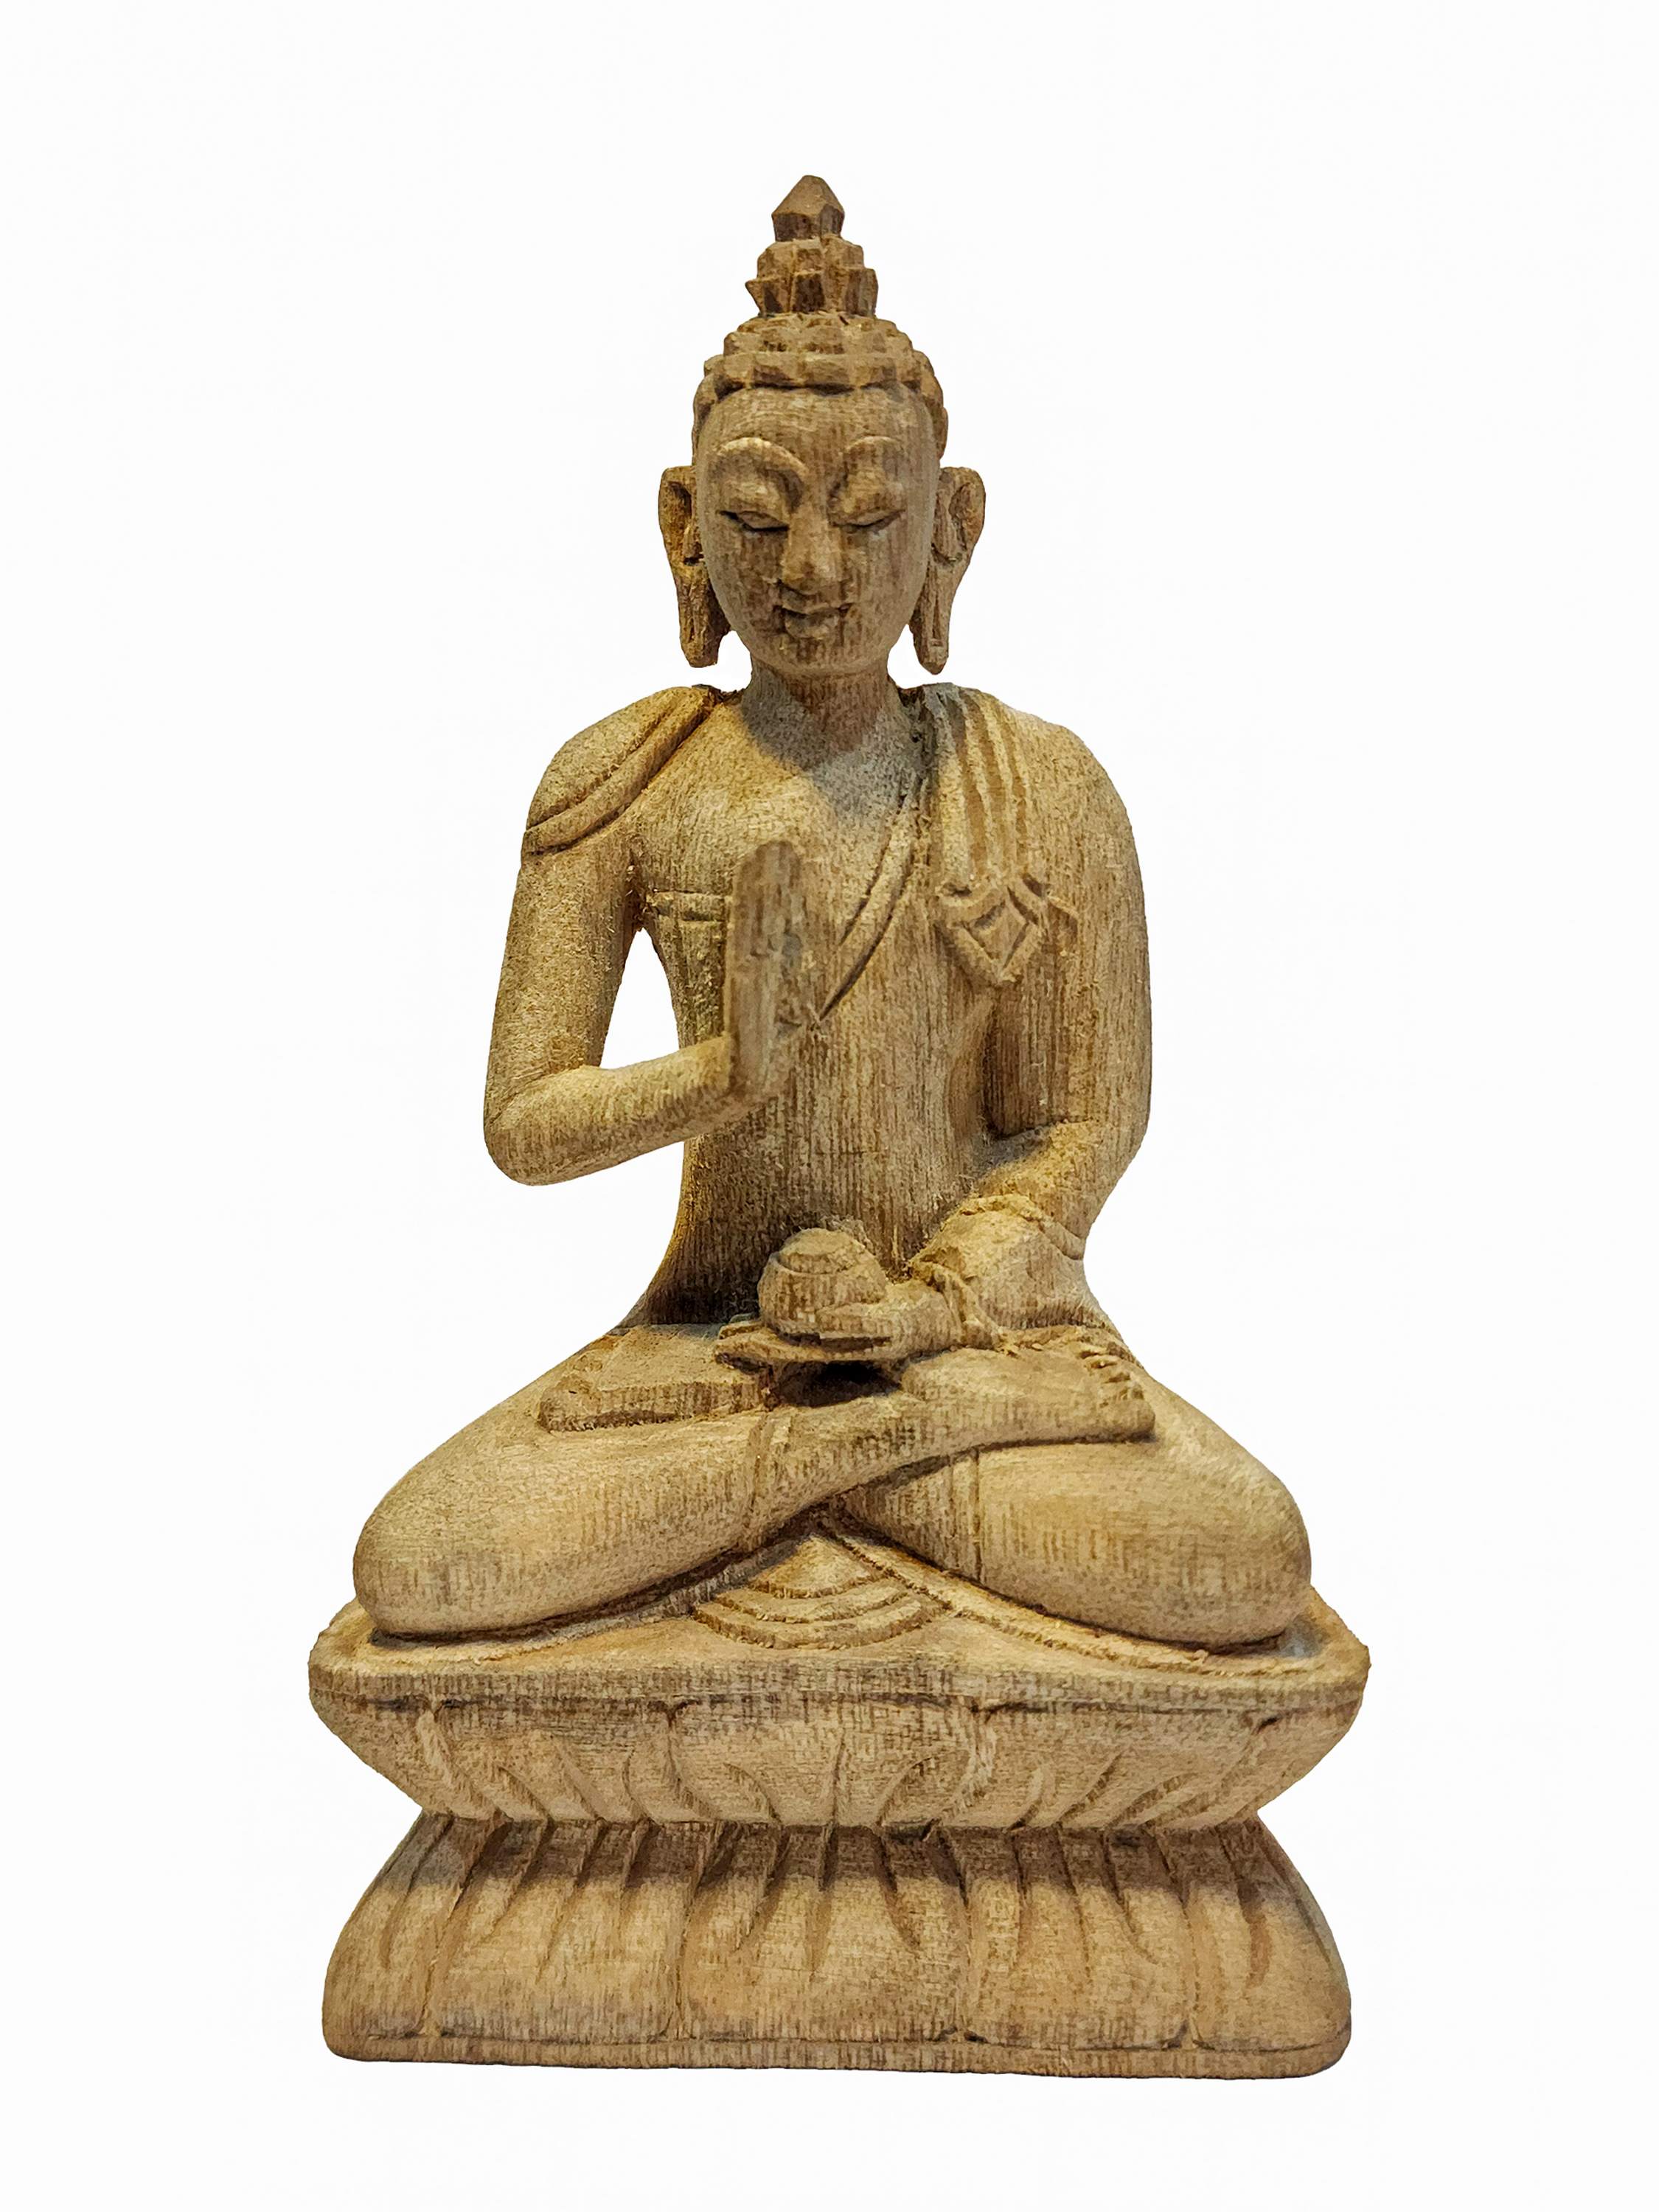 Buddhist Handmade Wooden Statue Of Amoghasiddhi Buddha, Or Blessing Buddha camphor Wood